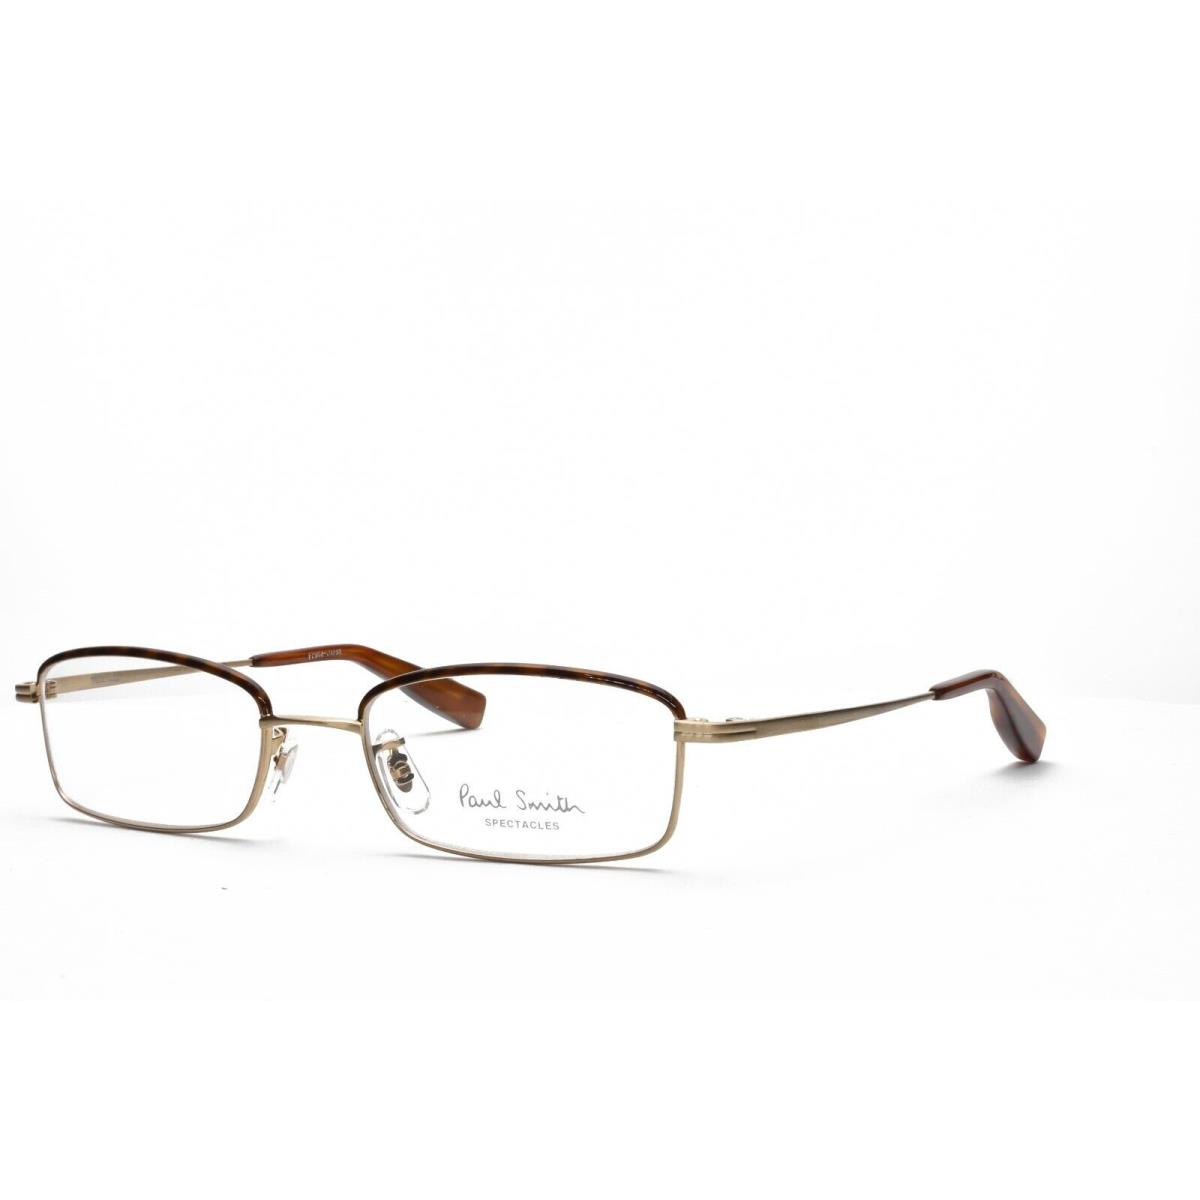 Paul Smith PS 1010 Wmt/bg Eyeglasses Frames Only 50-18-140